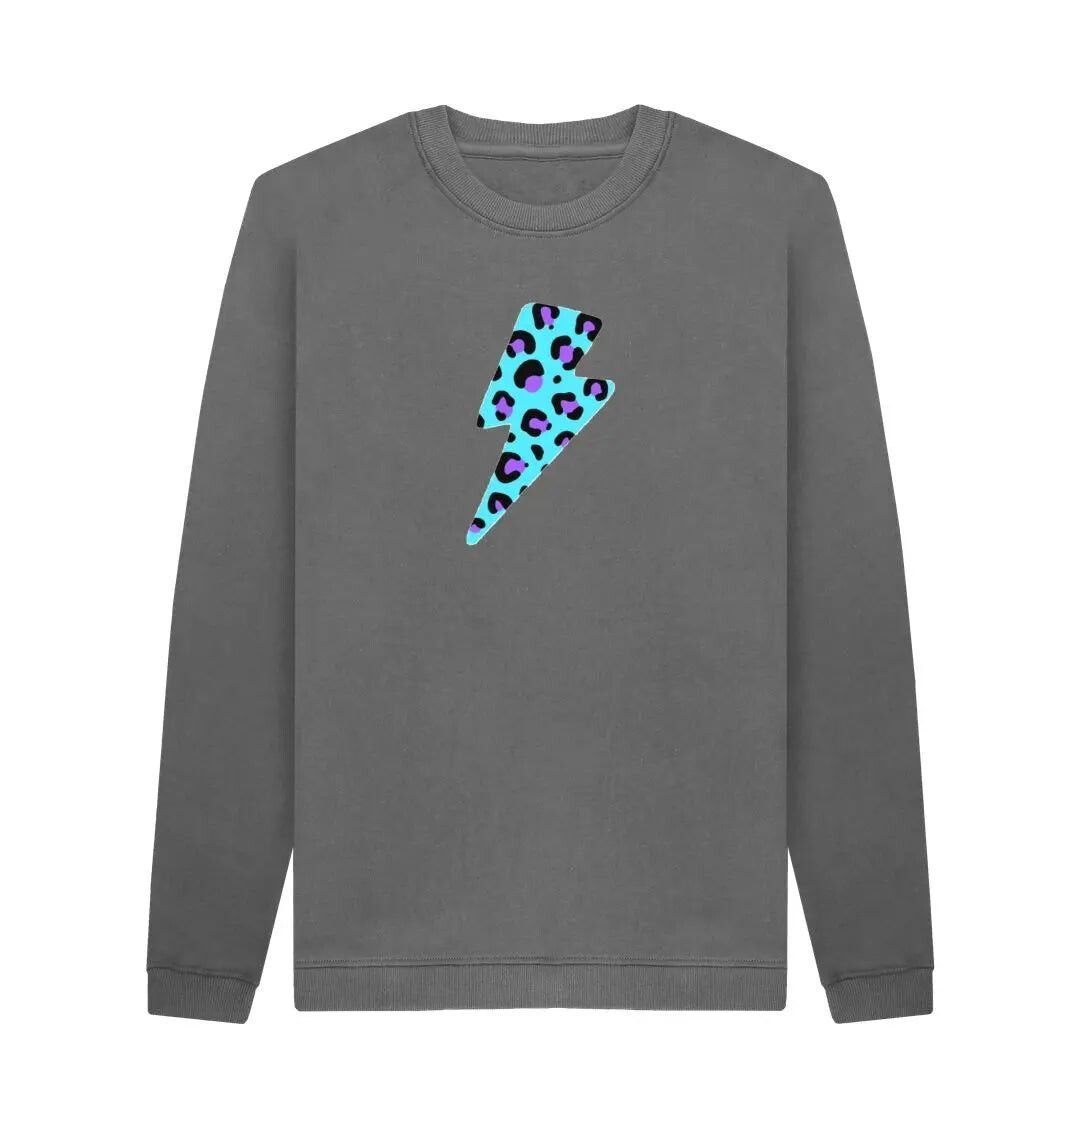 Unisex Blue leopard print lightning bolt sweater Trend Tonic